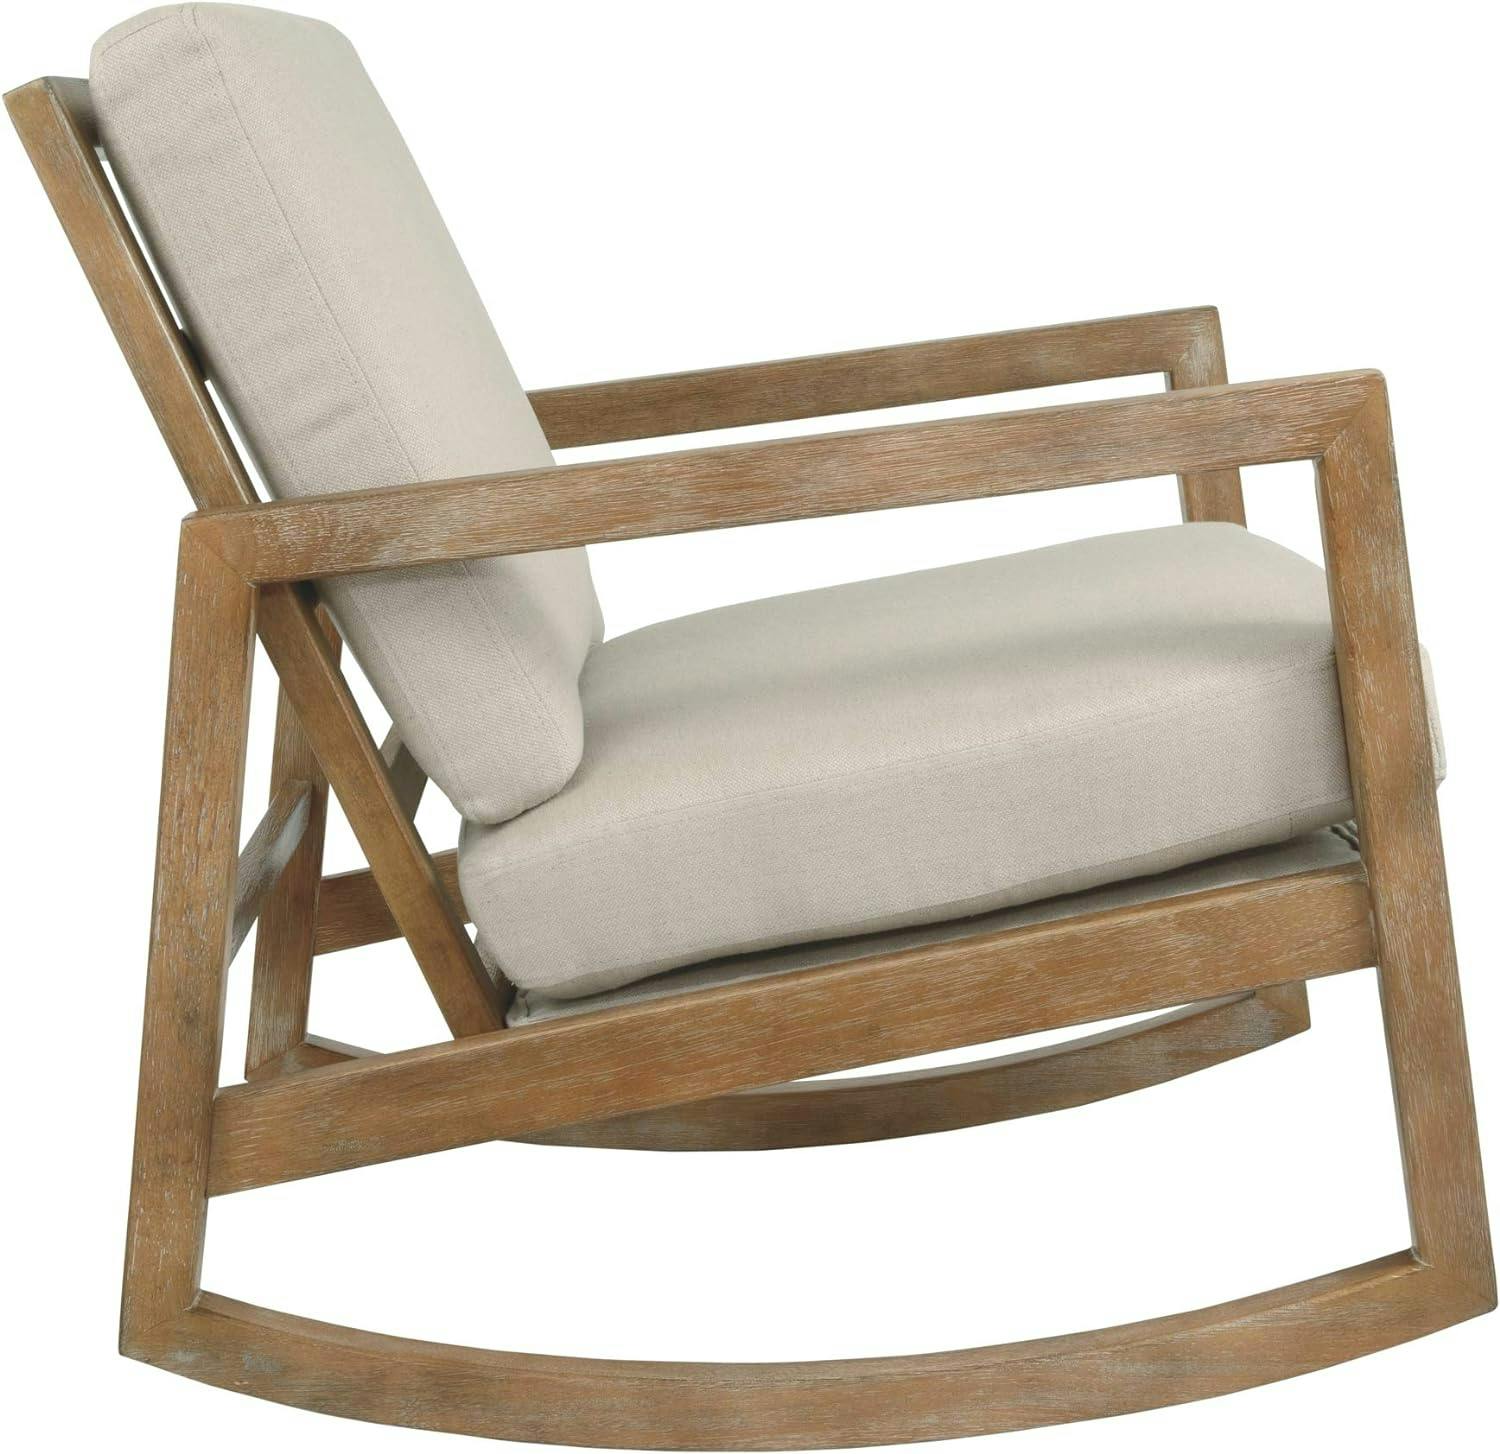 Contemporary Beige Wood Frame Rocker Accent Chair 25.5"